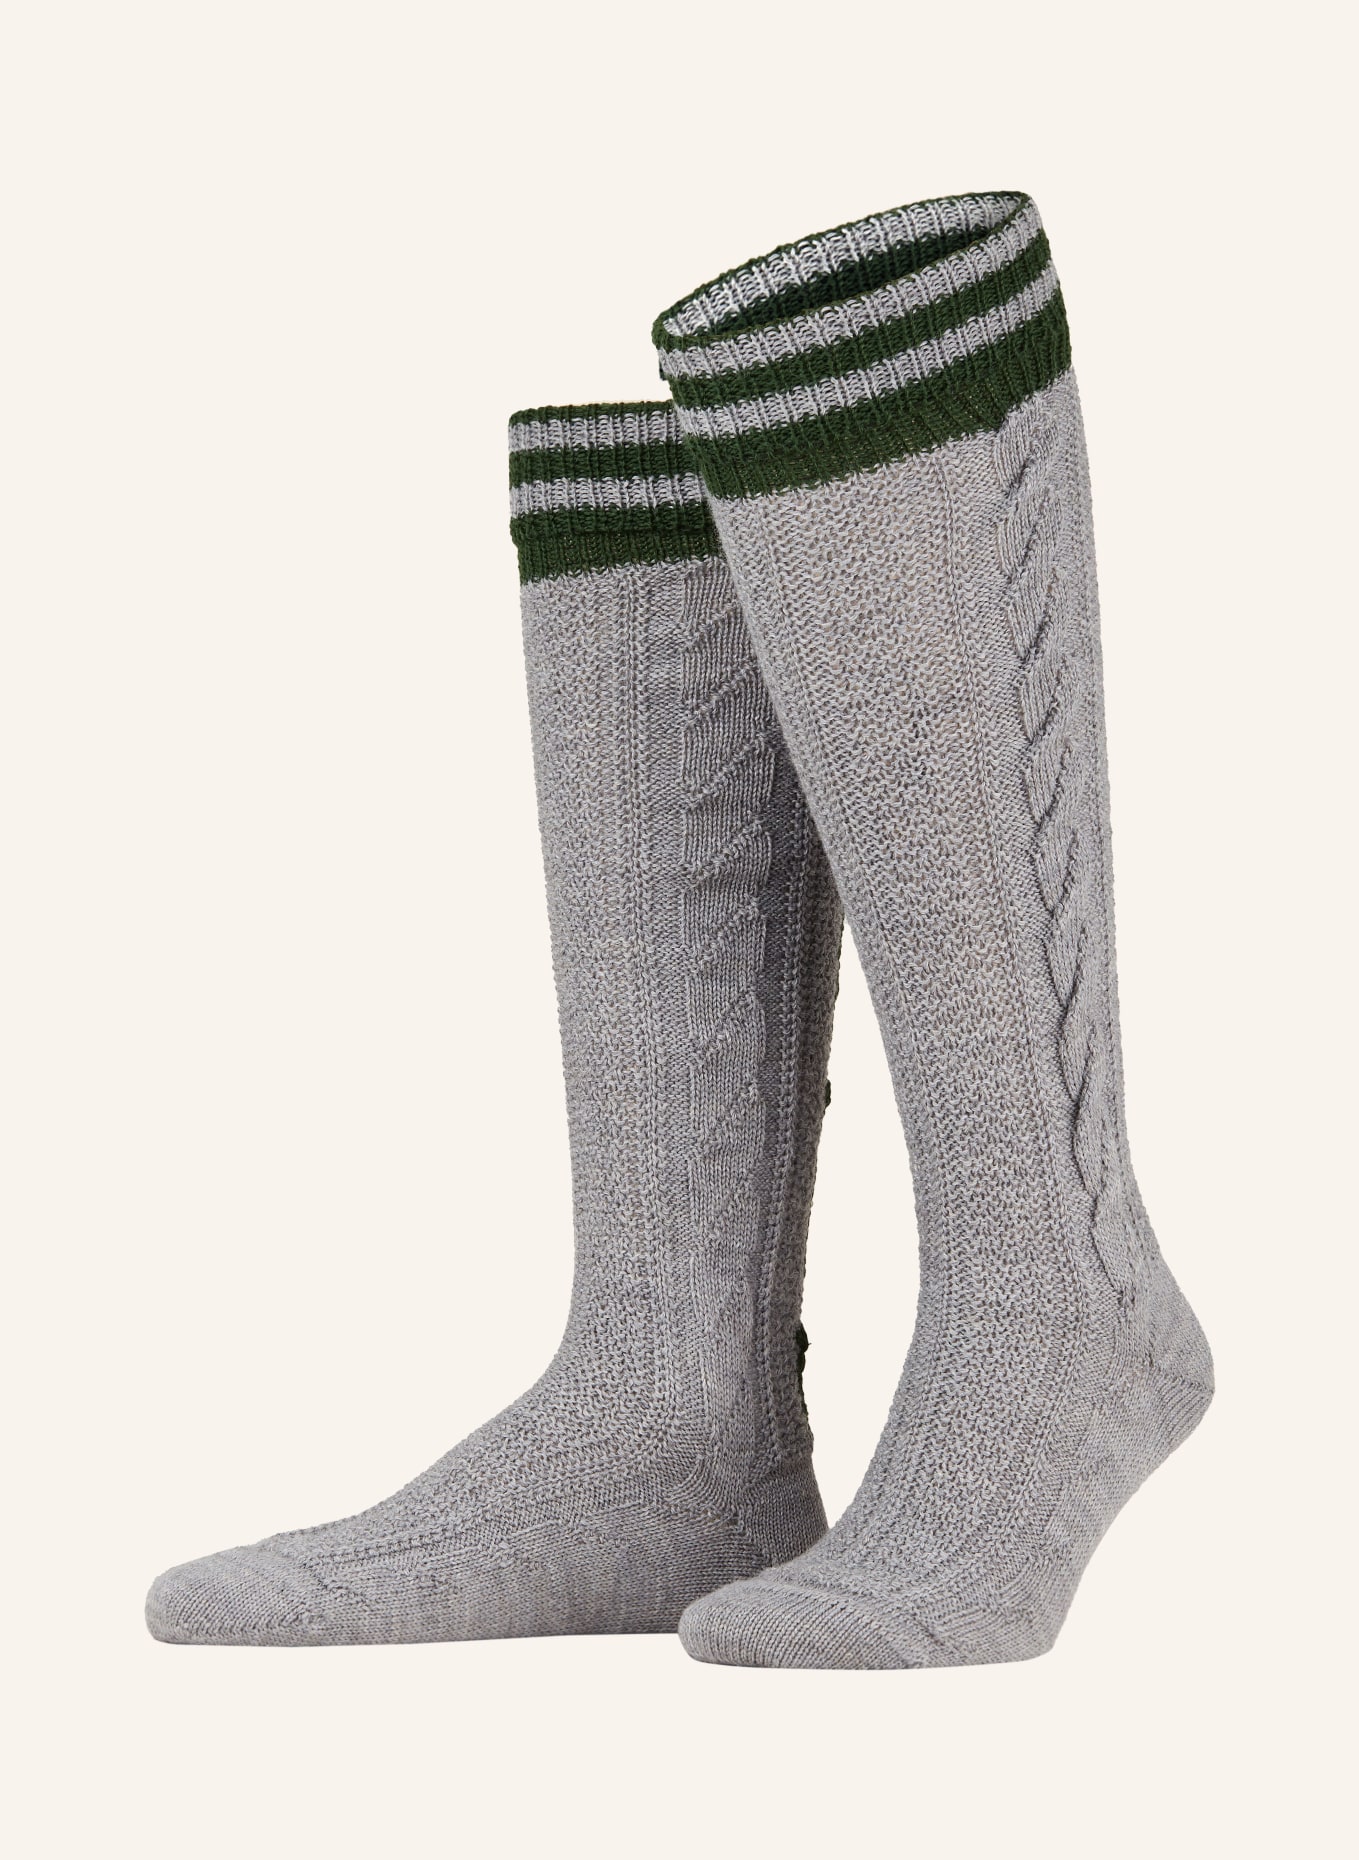 LUSANA Trachten knee high stockings made of merino wool, Color: 0319 mittelgrau / tanne (Image 1)